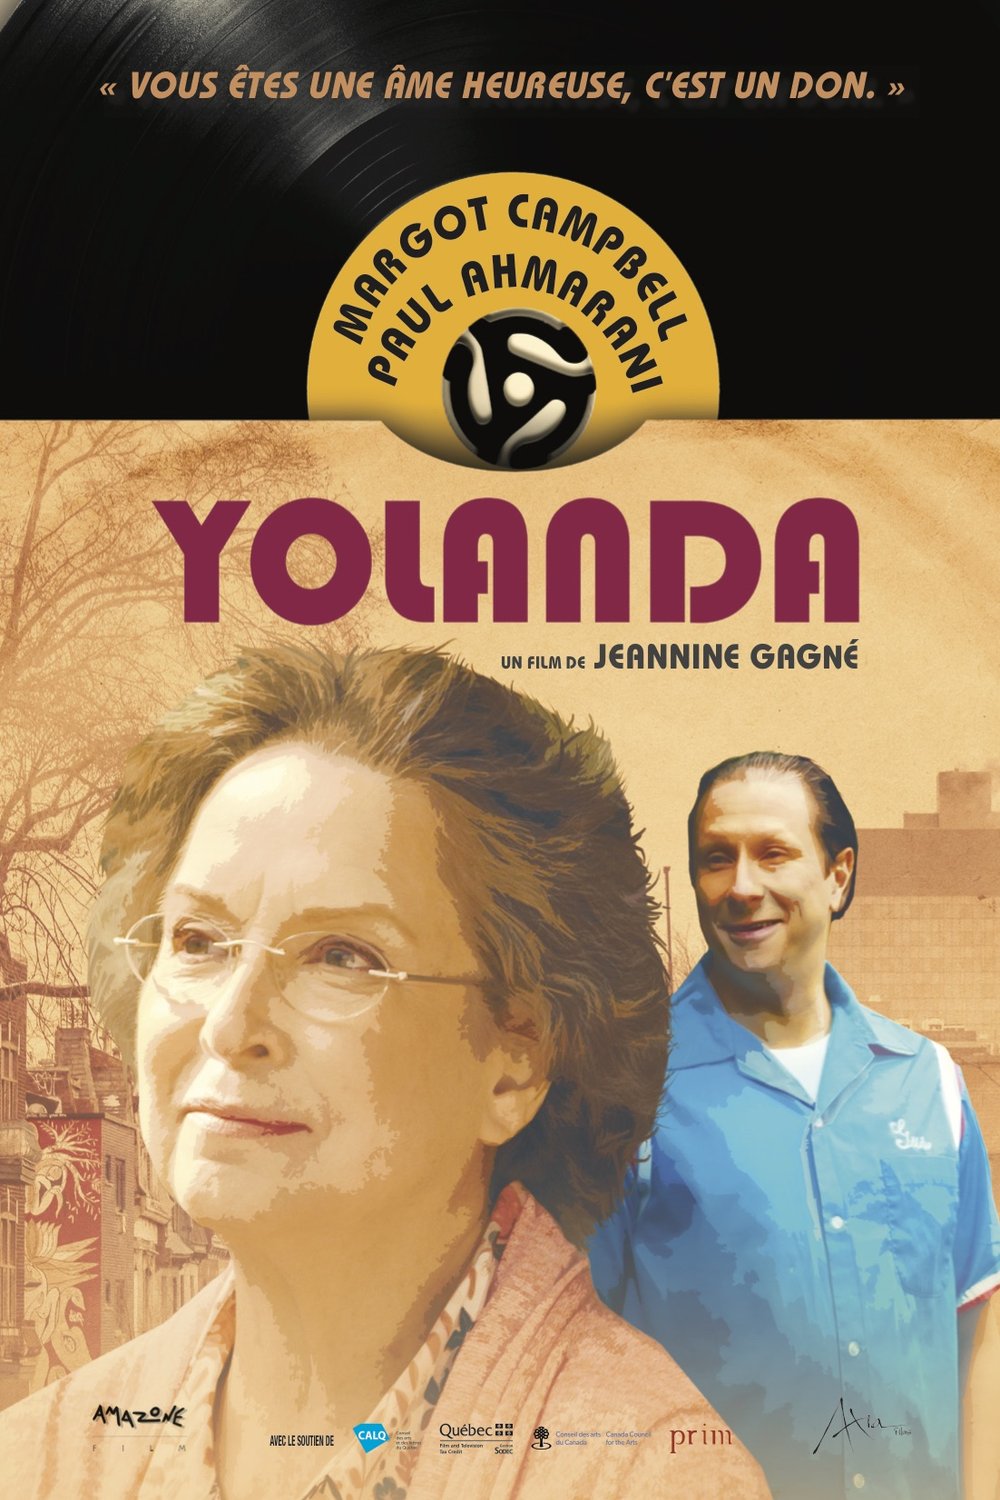 Poster of the movie Yolanda